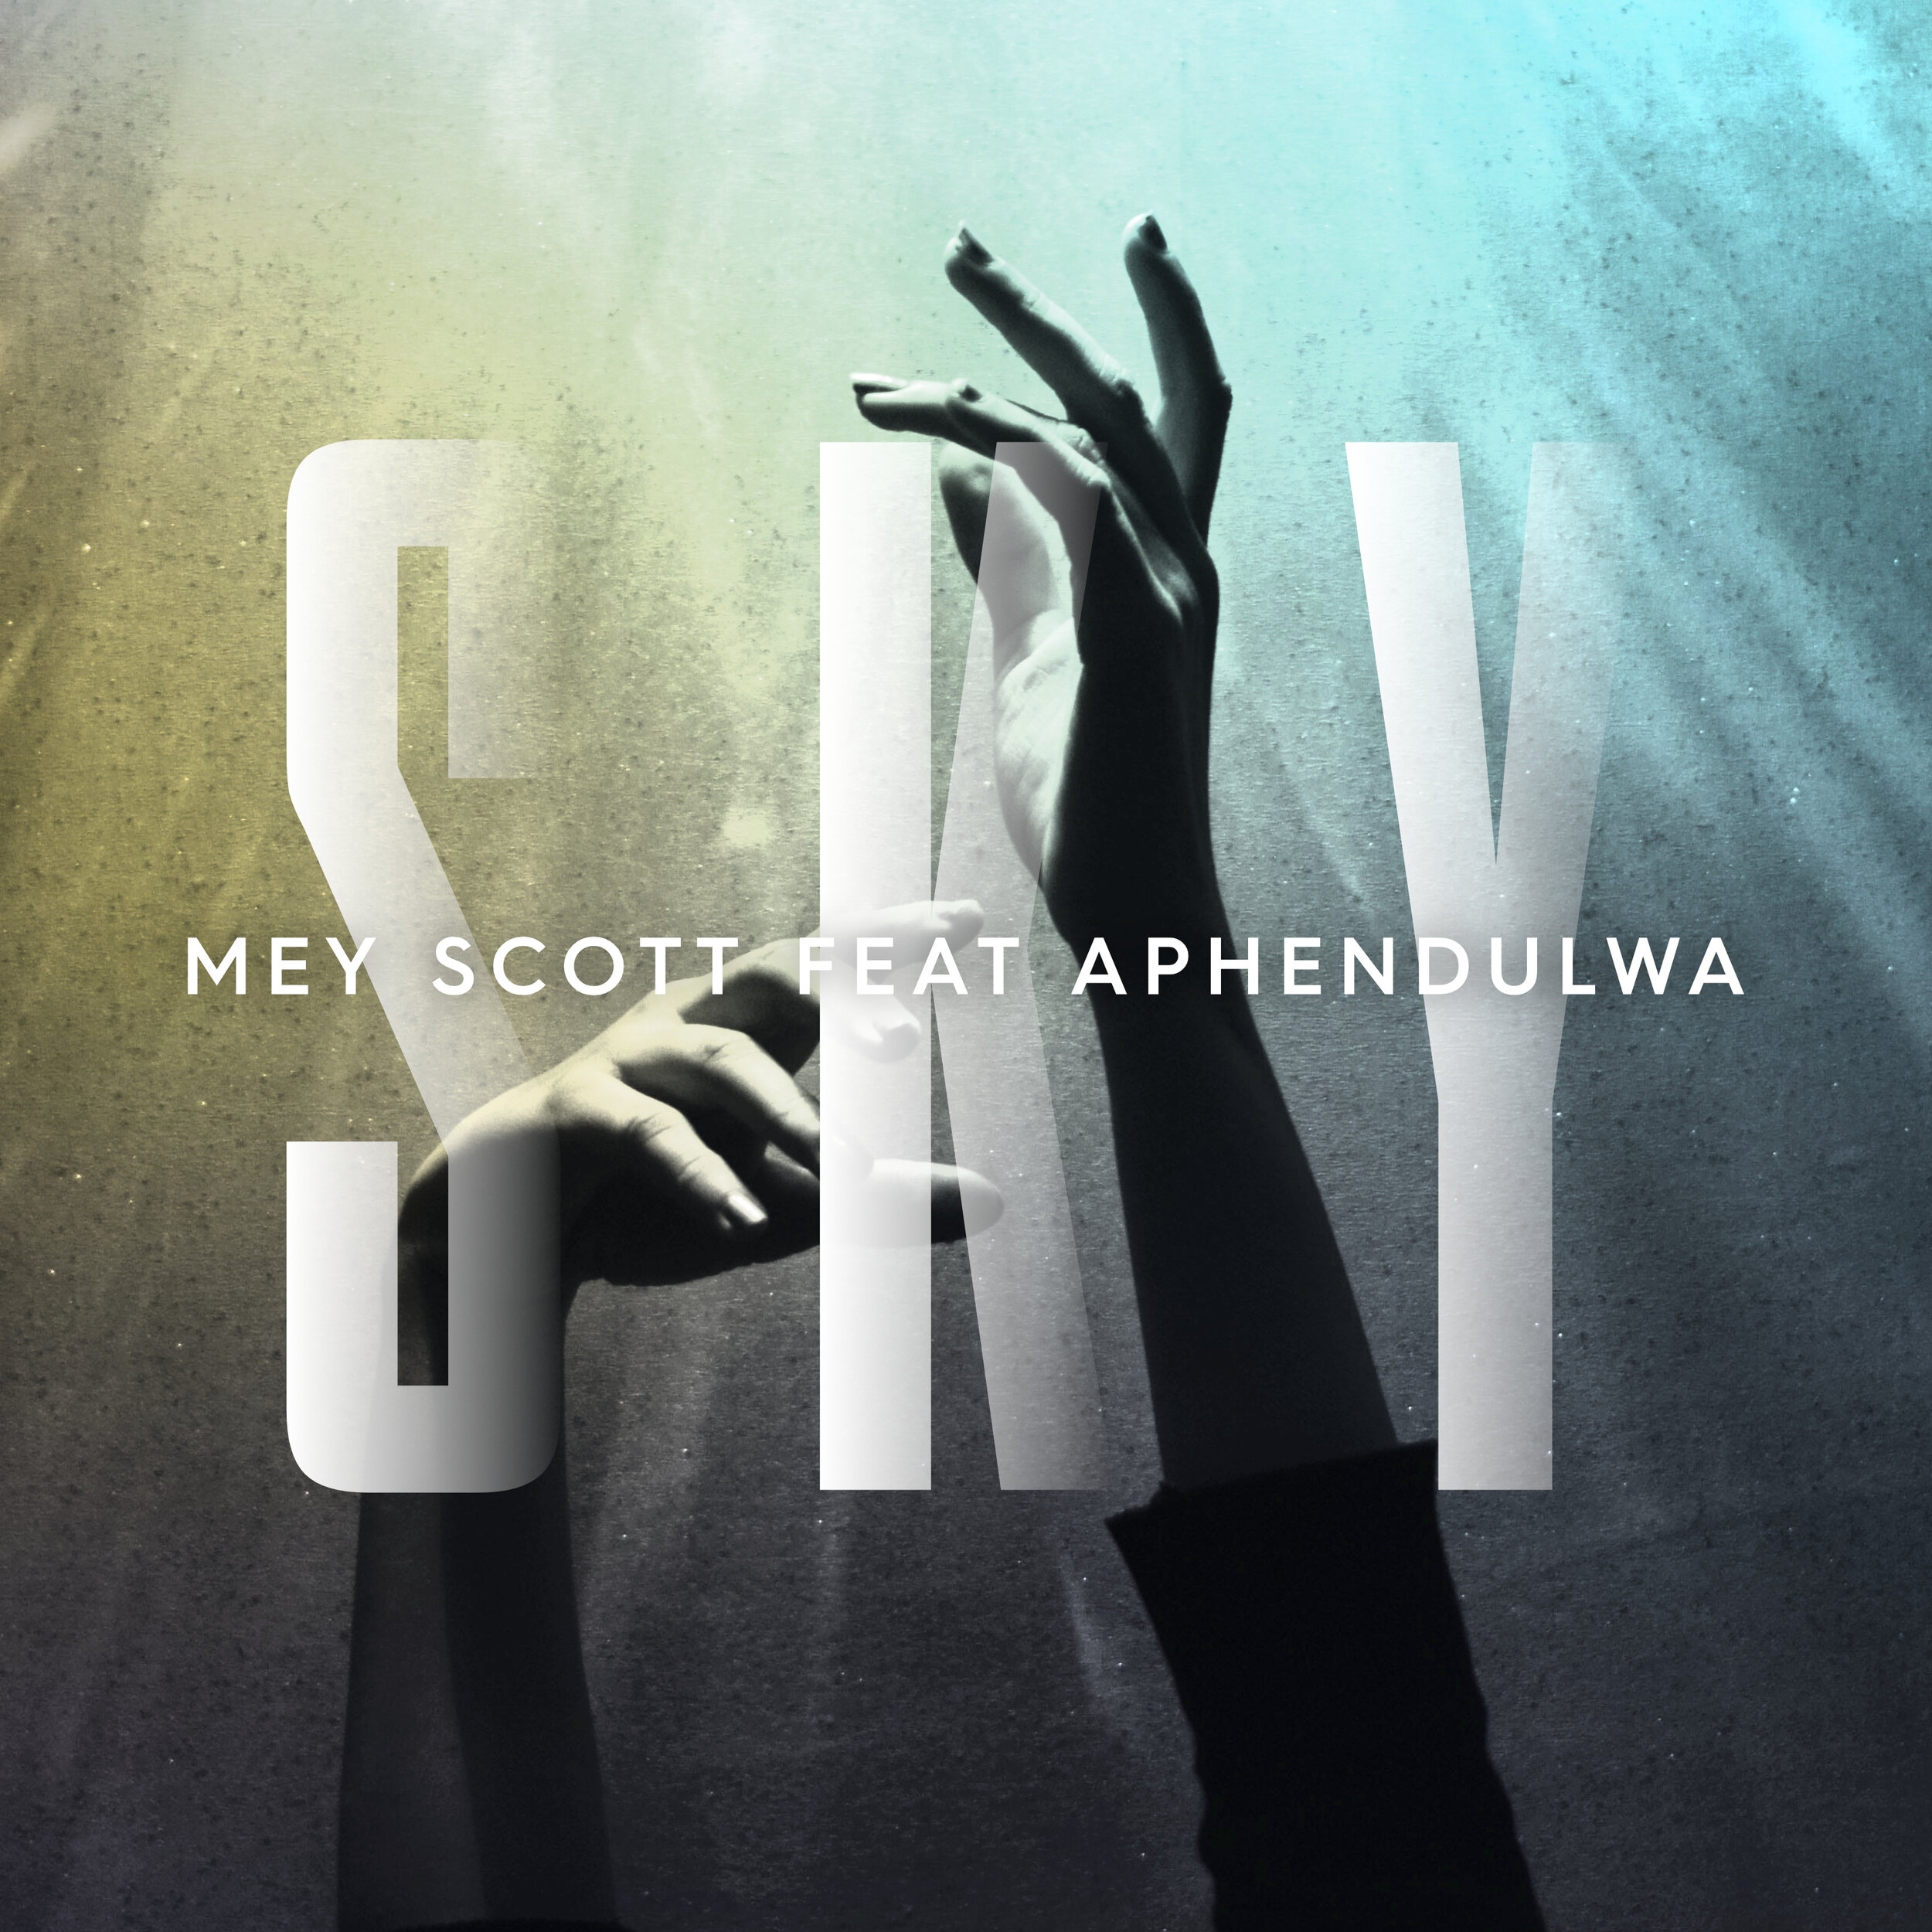 Mey Scott ft. Aphendulwa - Sky (Original) - Artwork 2 (1).jpg